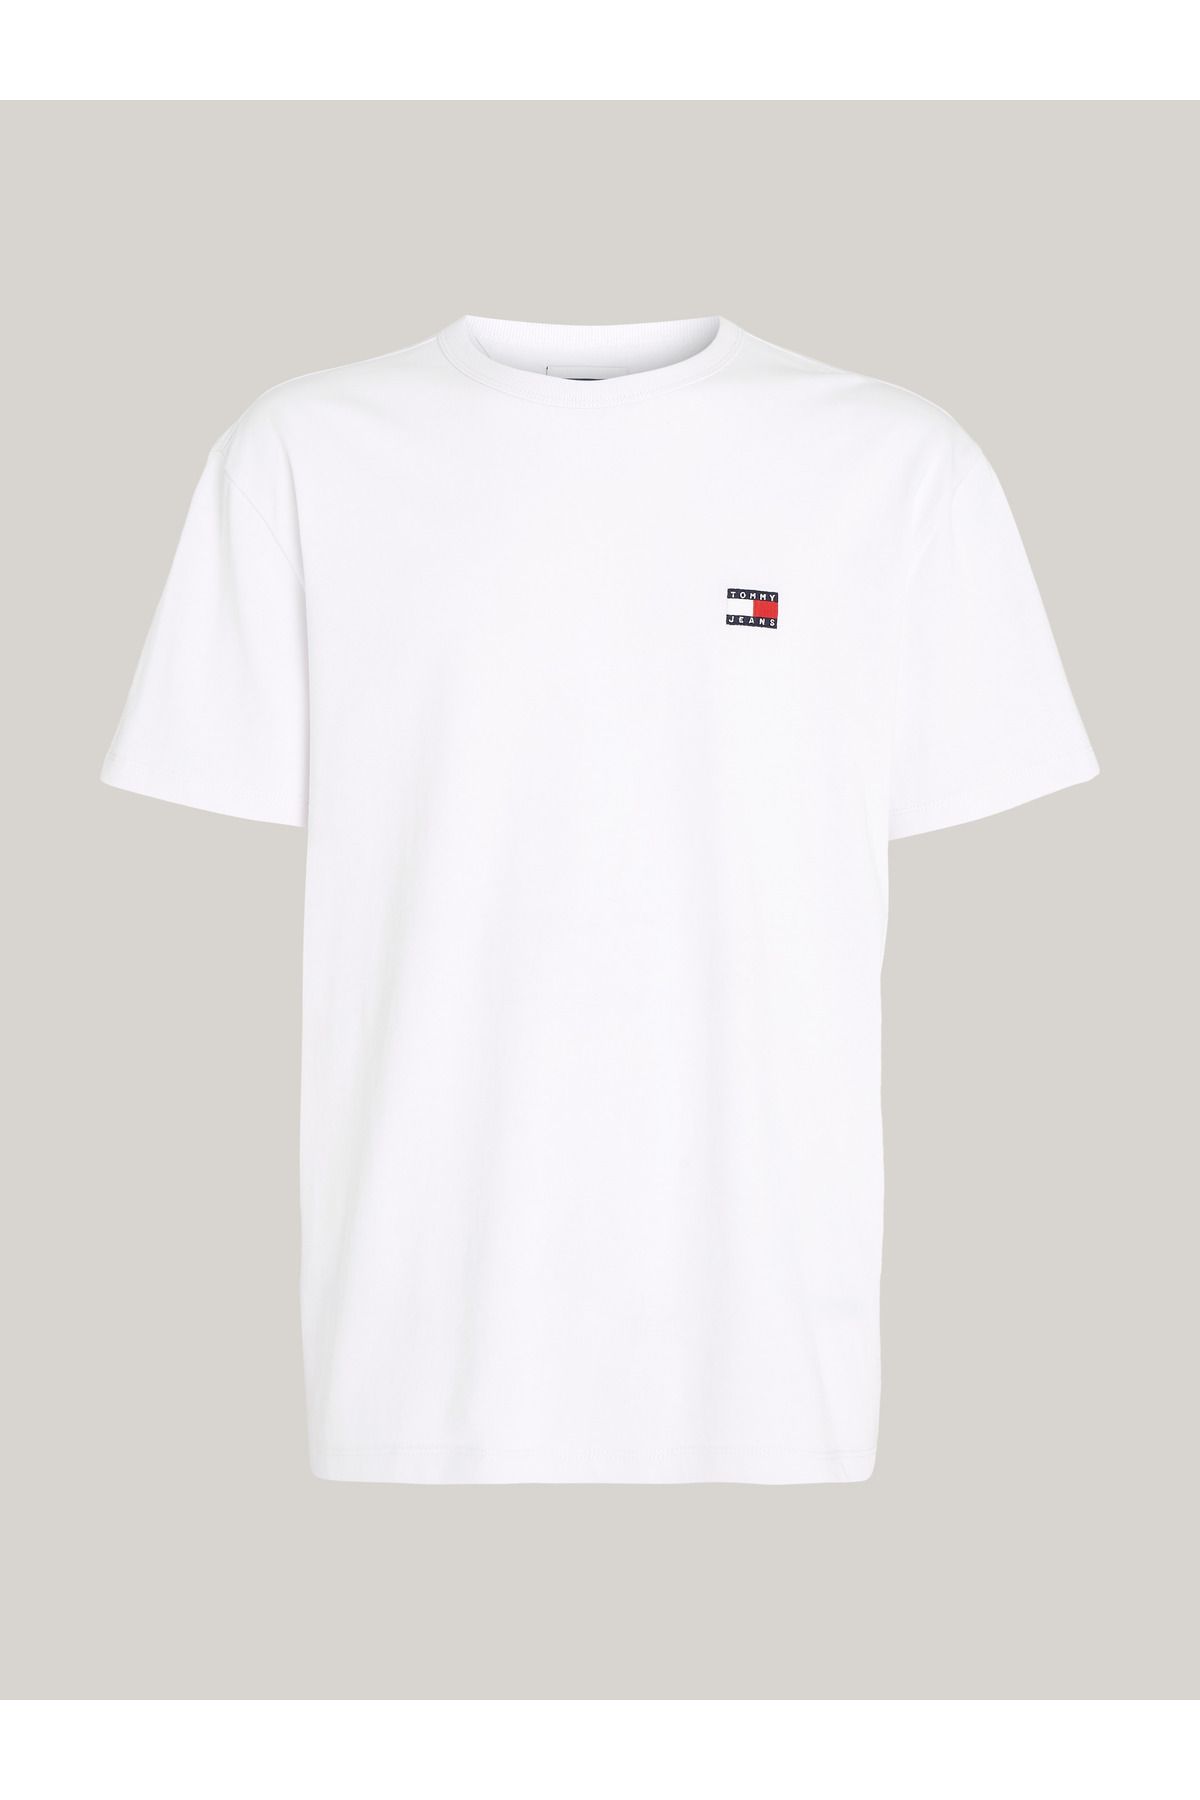 Tommy Hilfiger Erkek Marka Logolu Organik Pamuklu Günlük Kullanıma Uygun Beyaz T-shirt Dm0dm17995-ybr